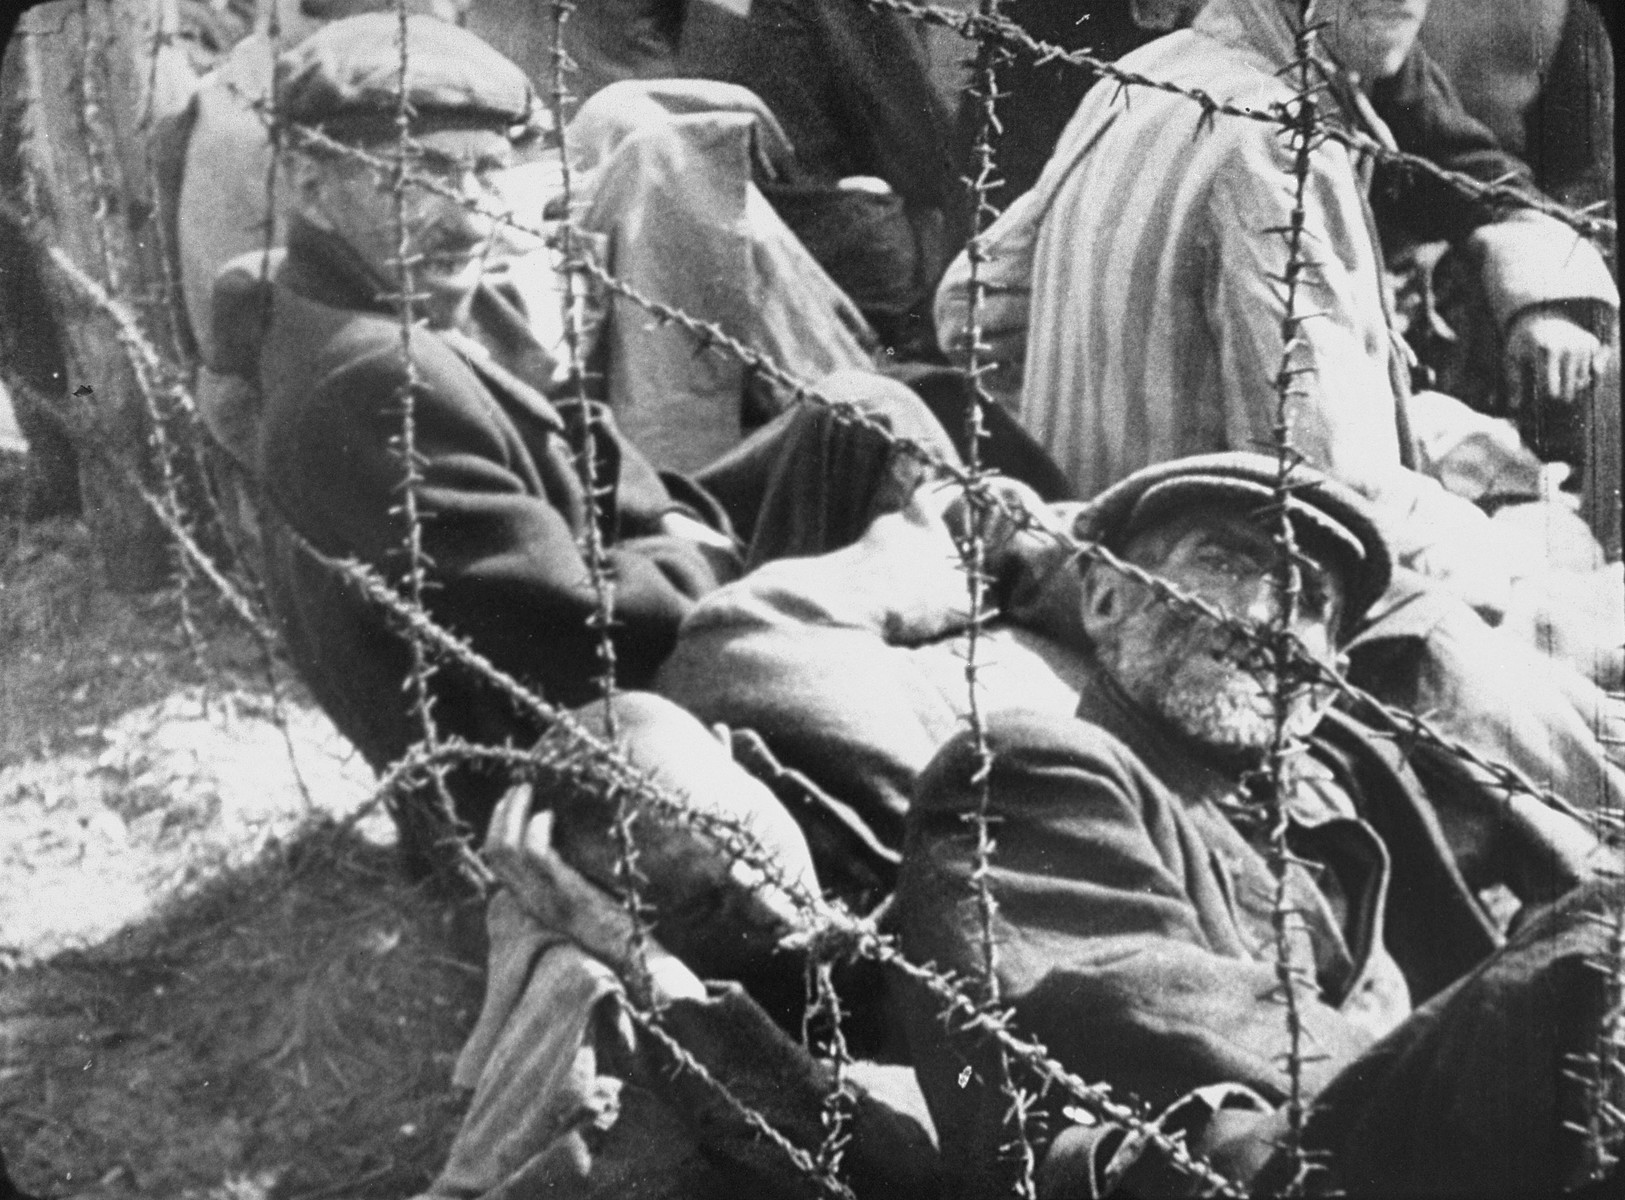 Survivors in Bergen-Belsen concentration camp rest behind a barbed wire fence after liberation.